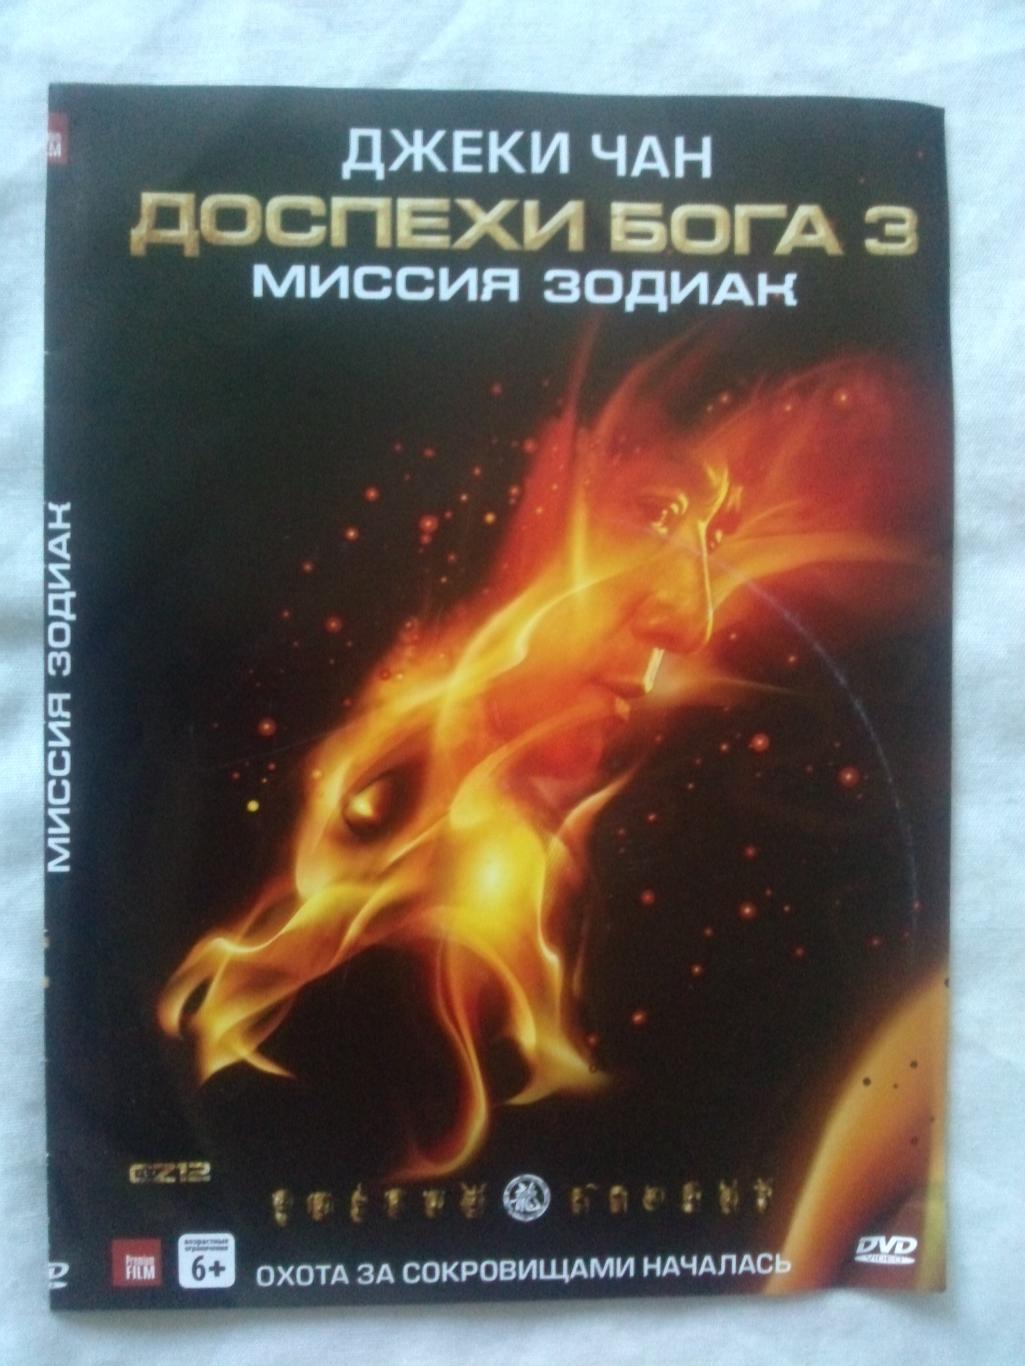 DVD Доспехи Бога 3 - Миссия Зодиак (Джеки Чан) 2012 г. (лицензия) новый